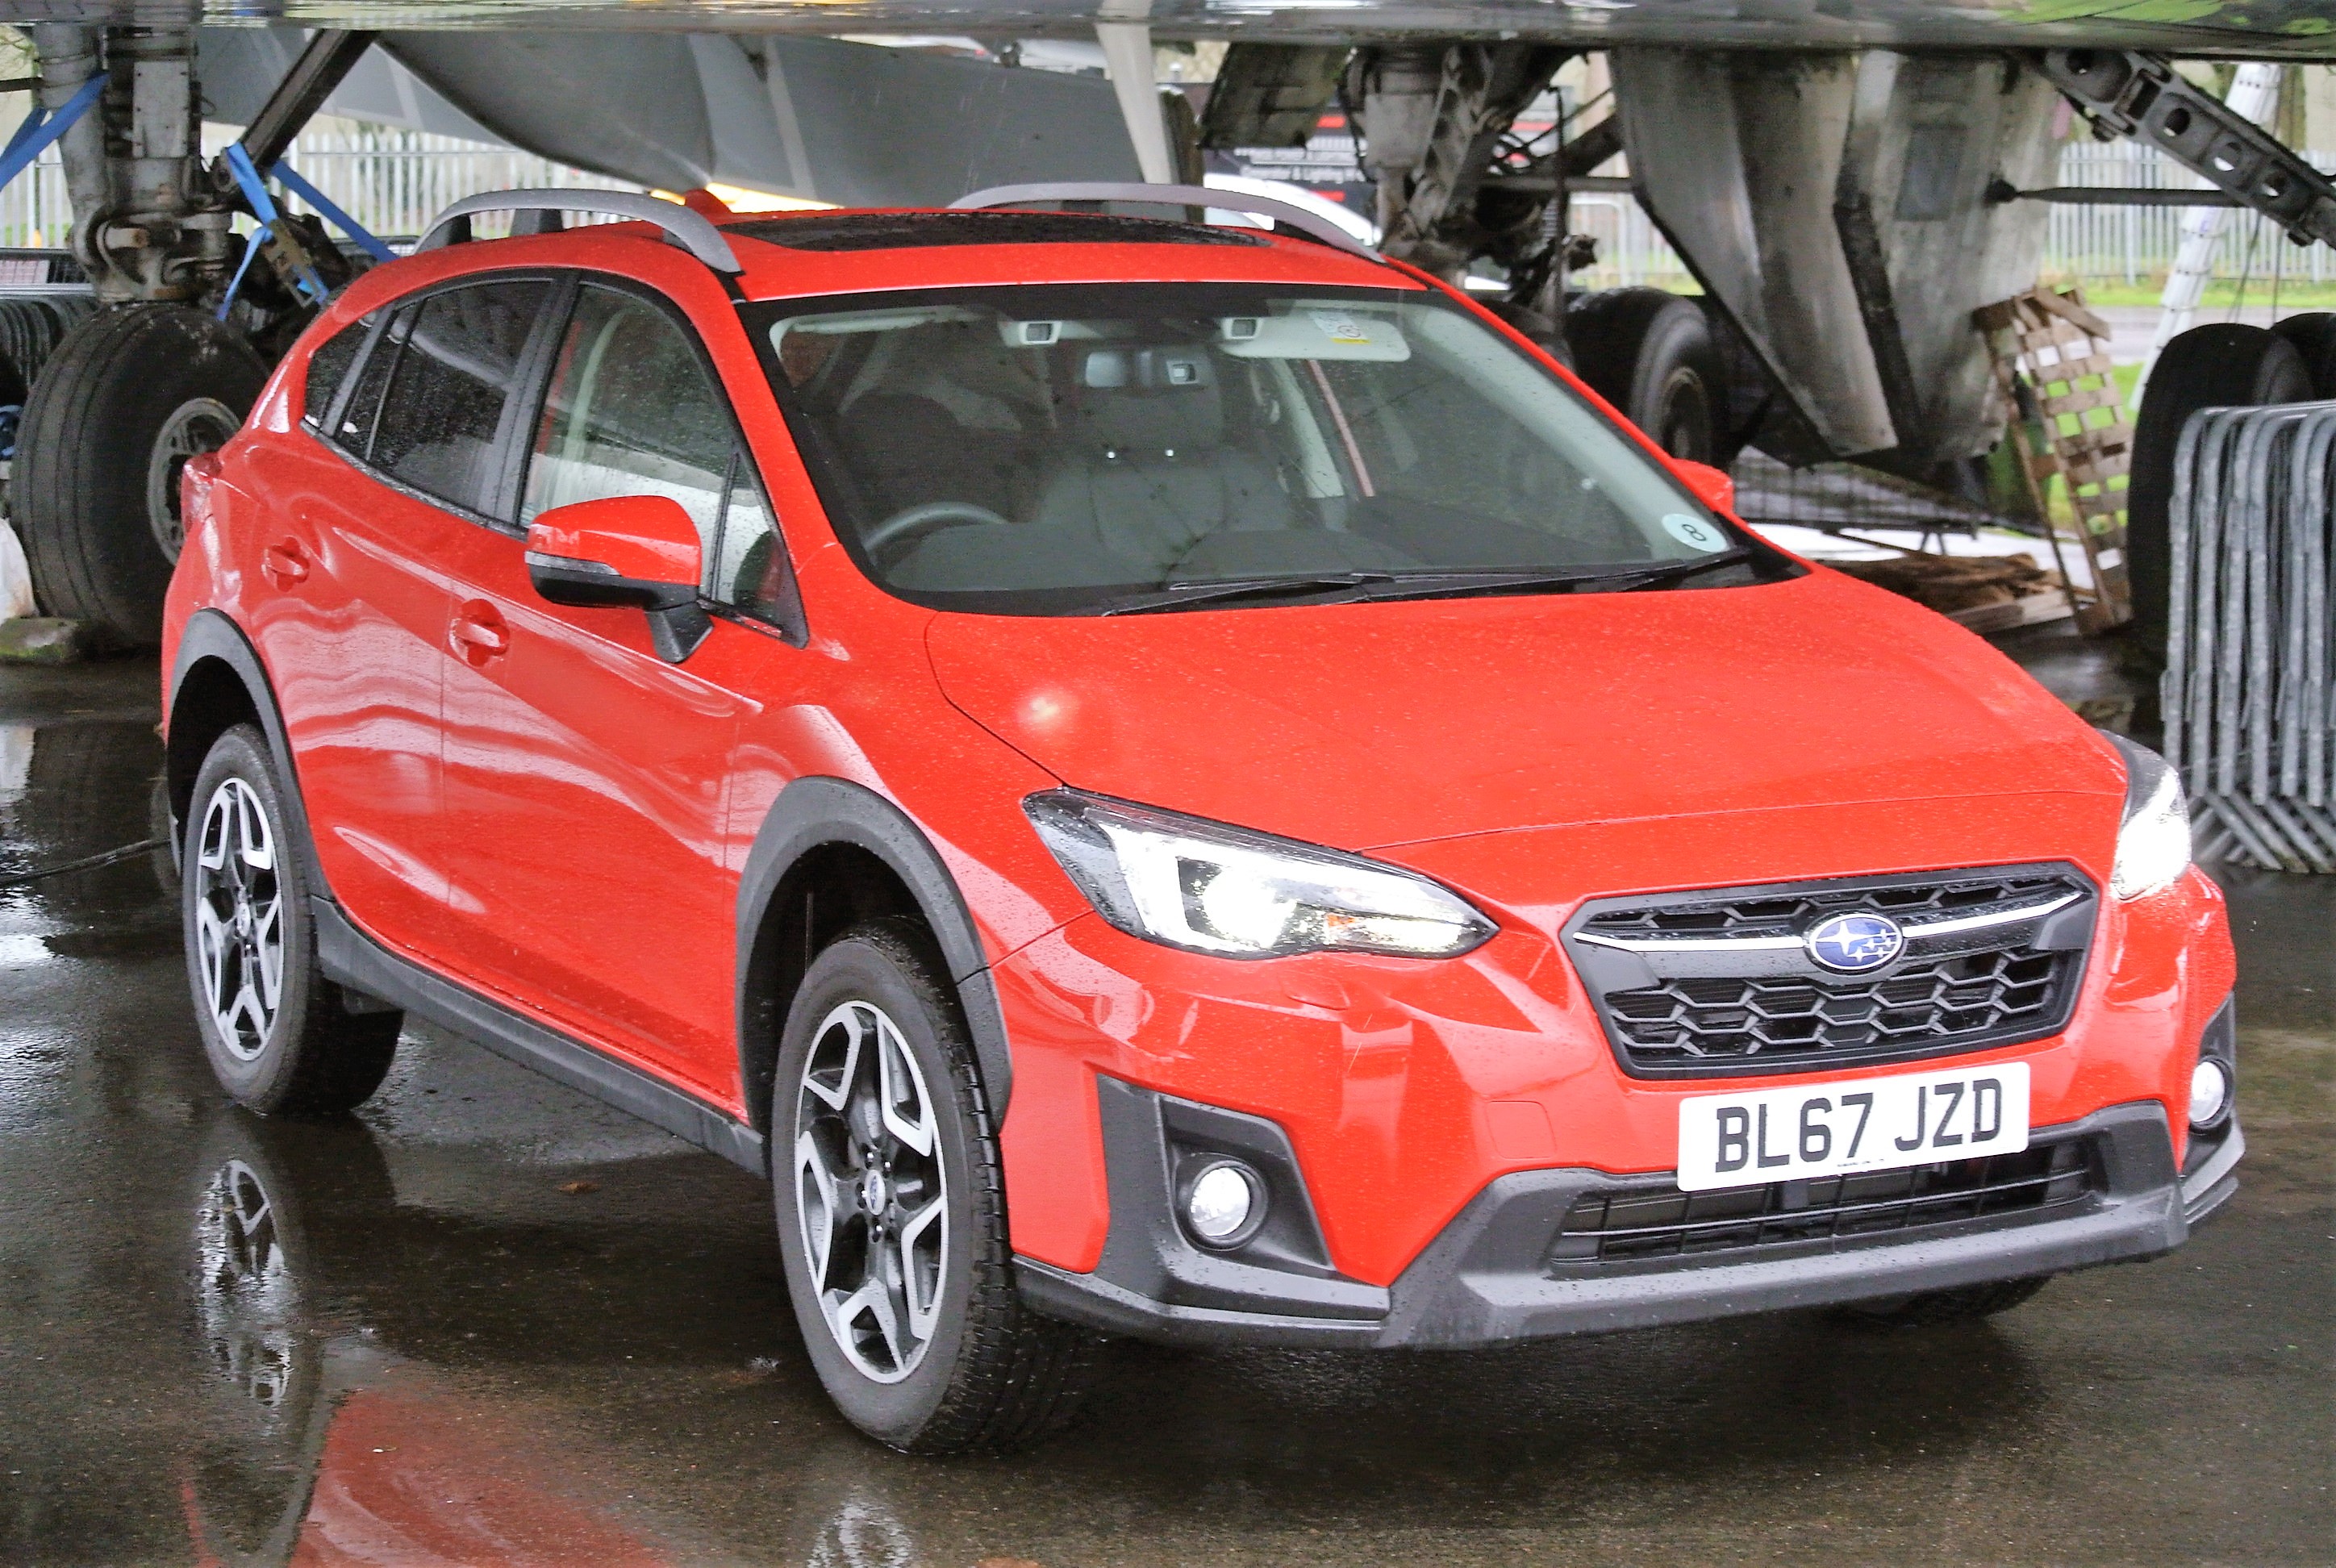 Subaru hopes that an all-new XV will bring back brand prosperity